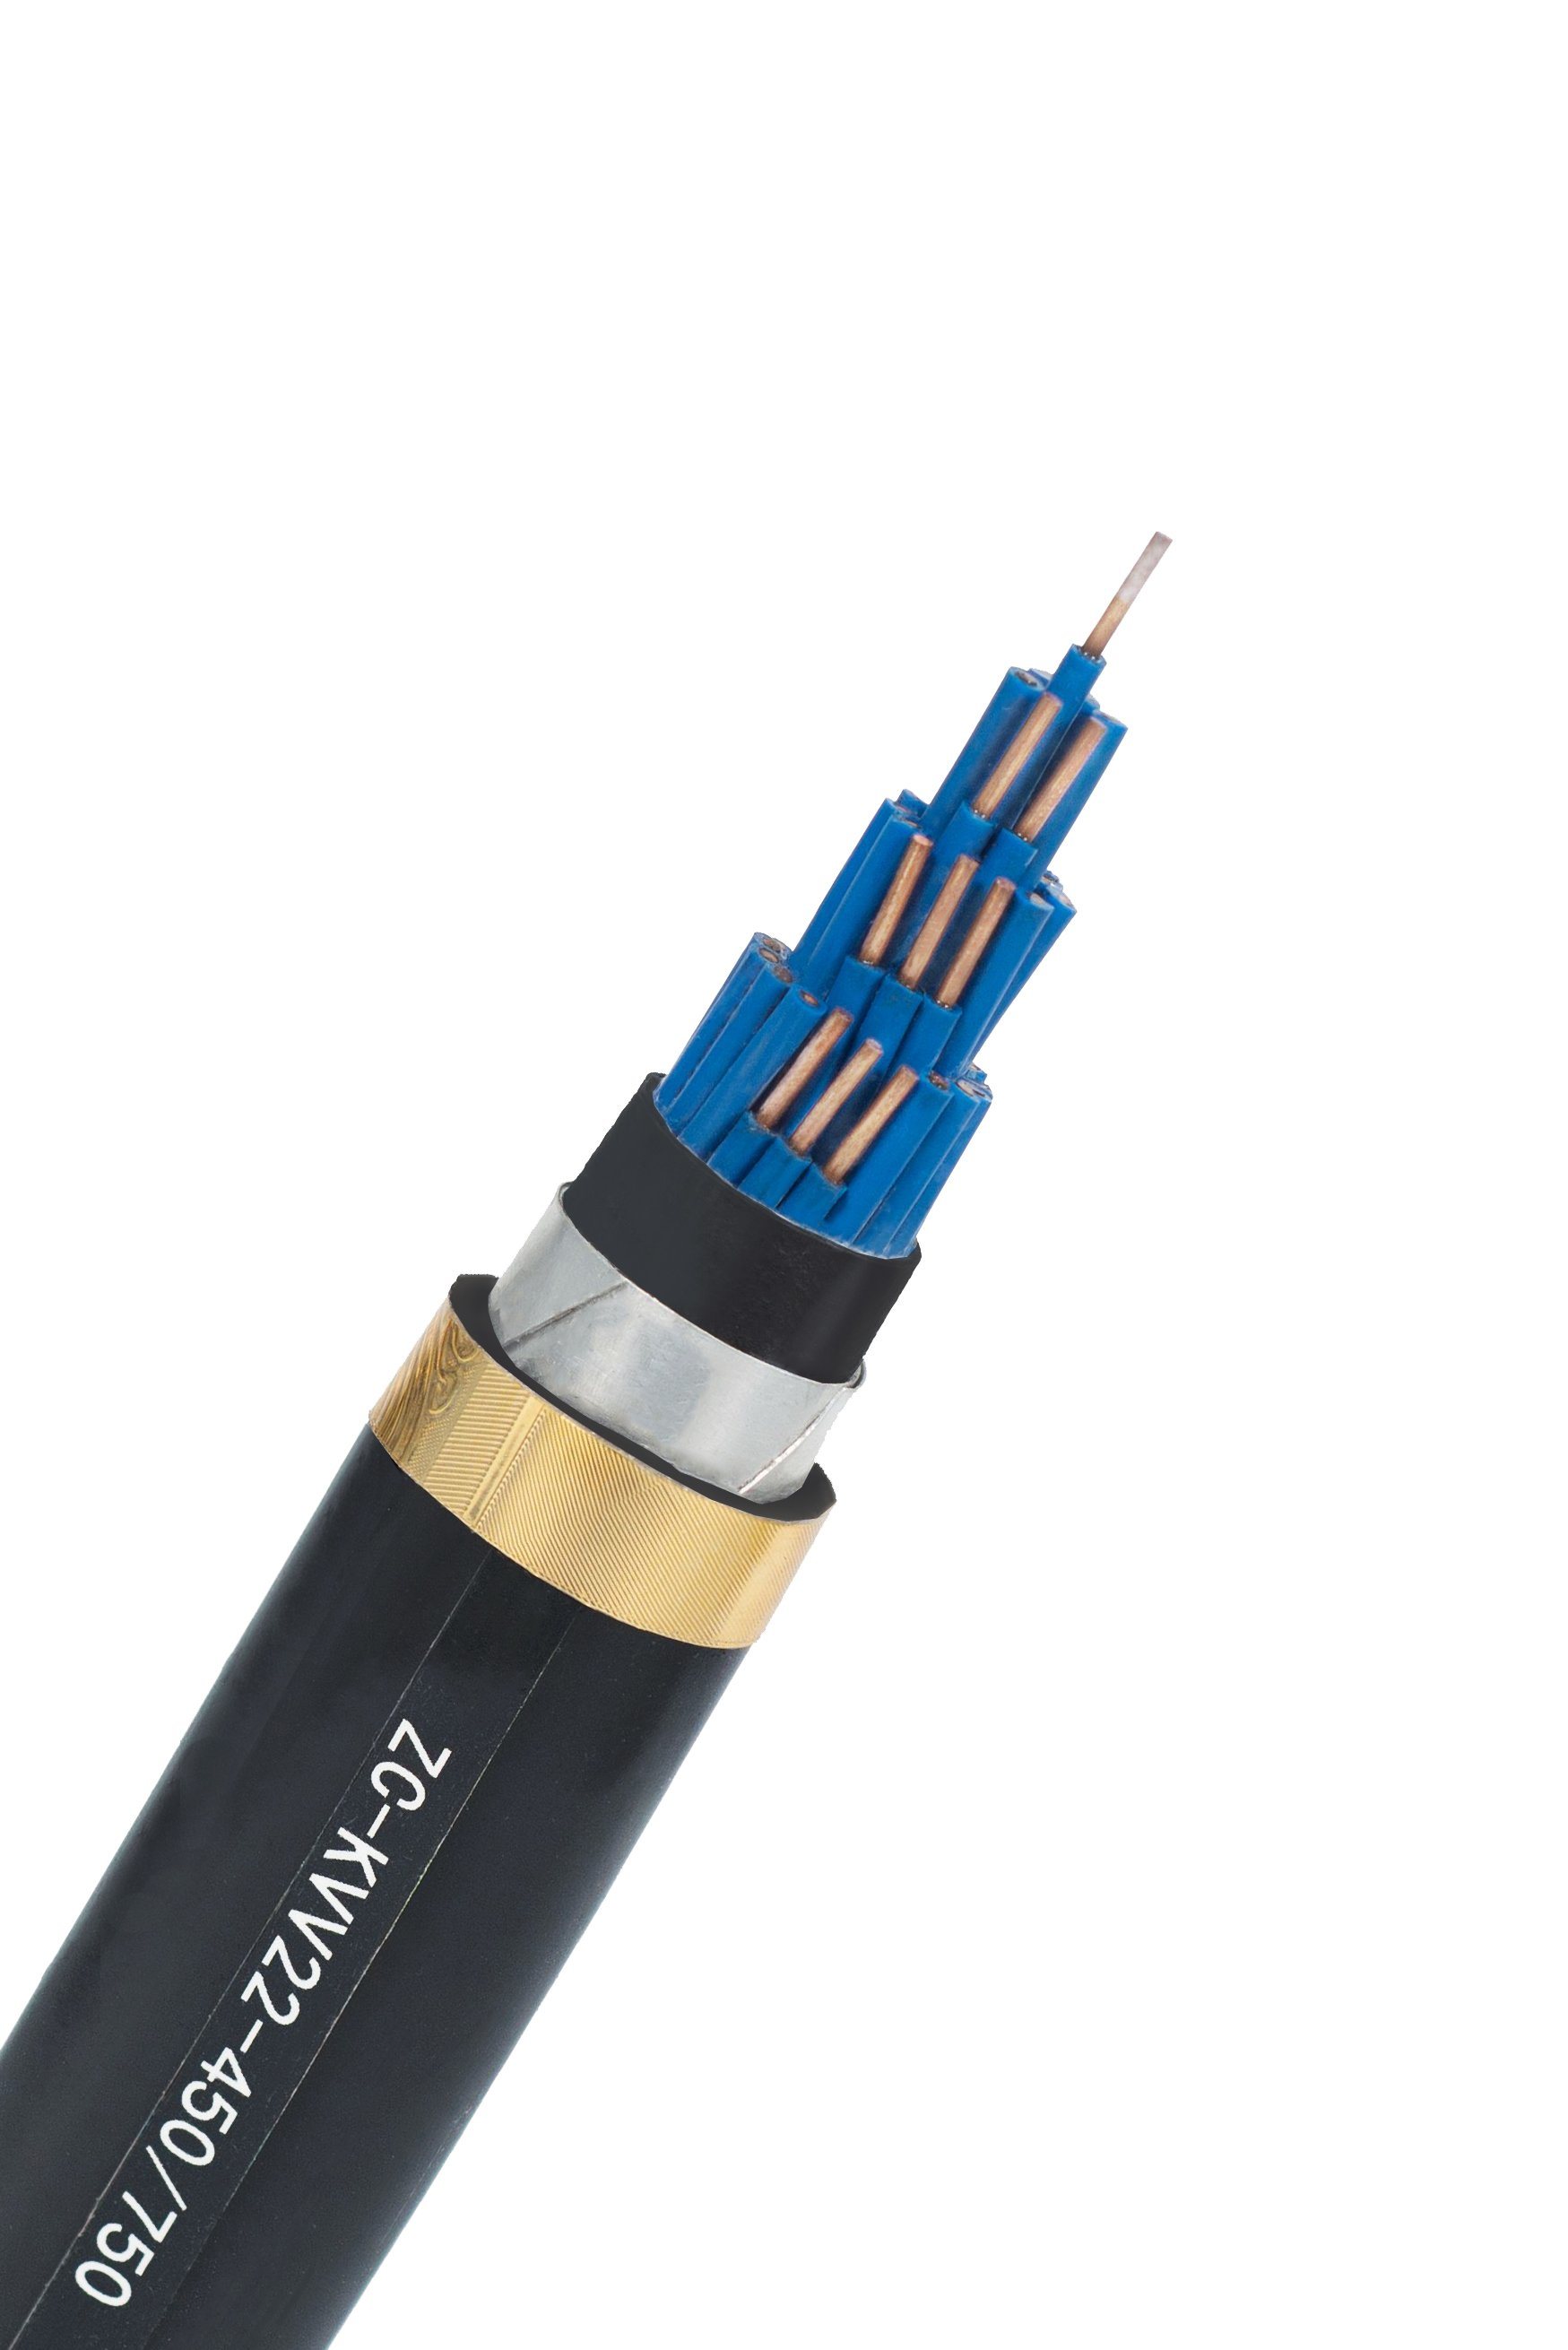 China 
                KVV Kvvrp 10 12 16 20 24 30 núcleo estañado Cable aislante de PVC 1,5mm flexible trenzado de cobre Cable
              fabricante y proveedor